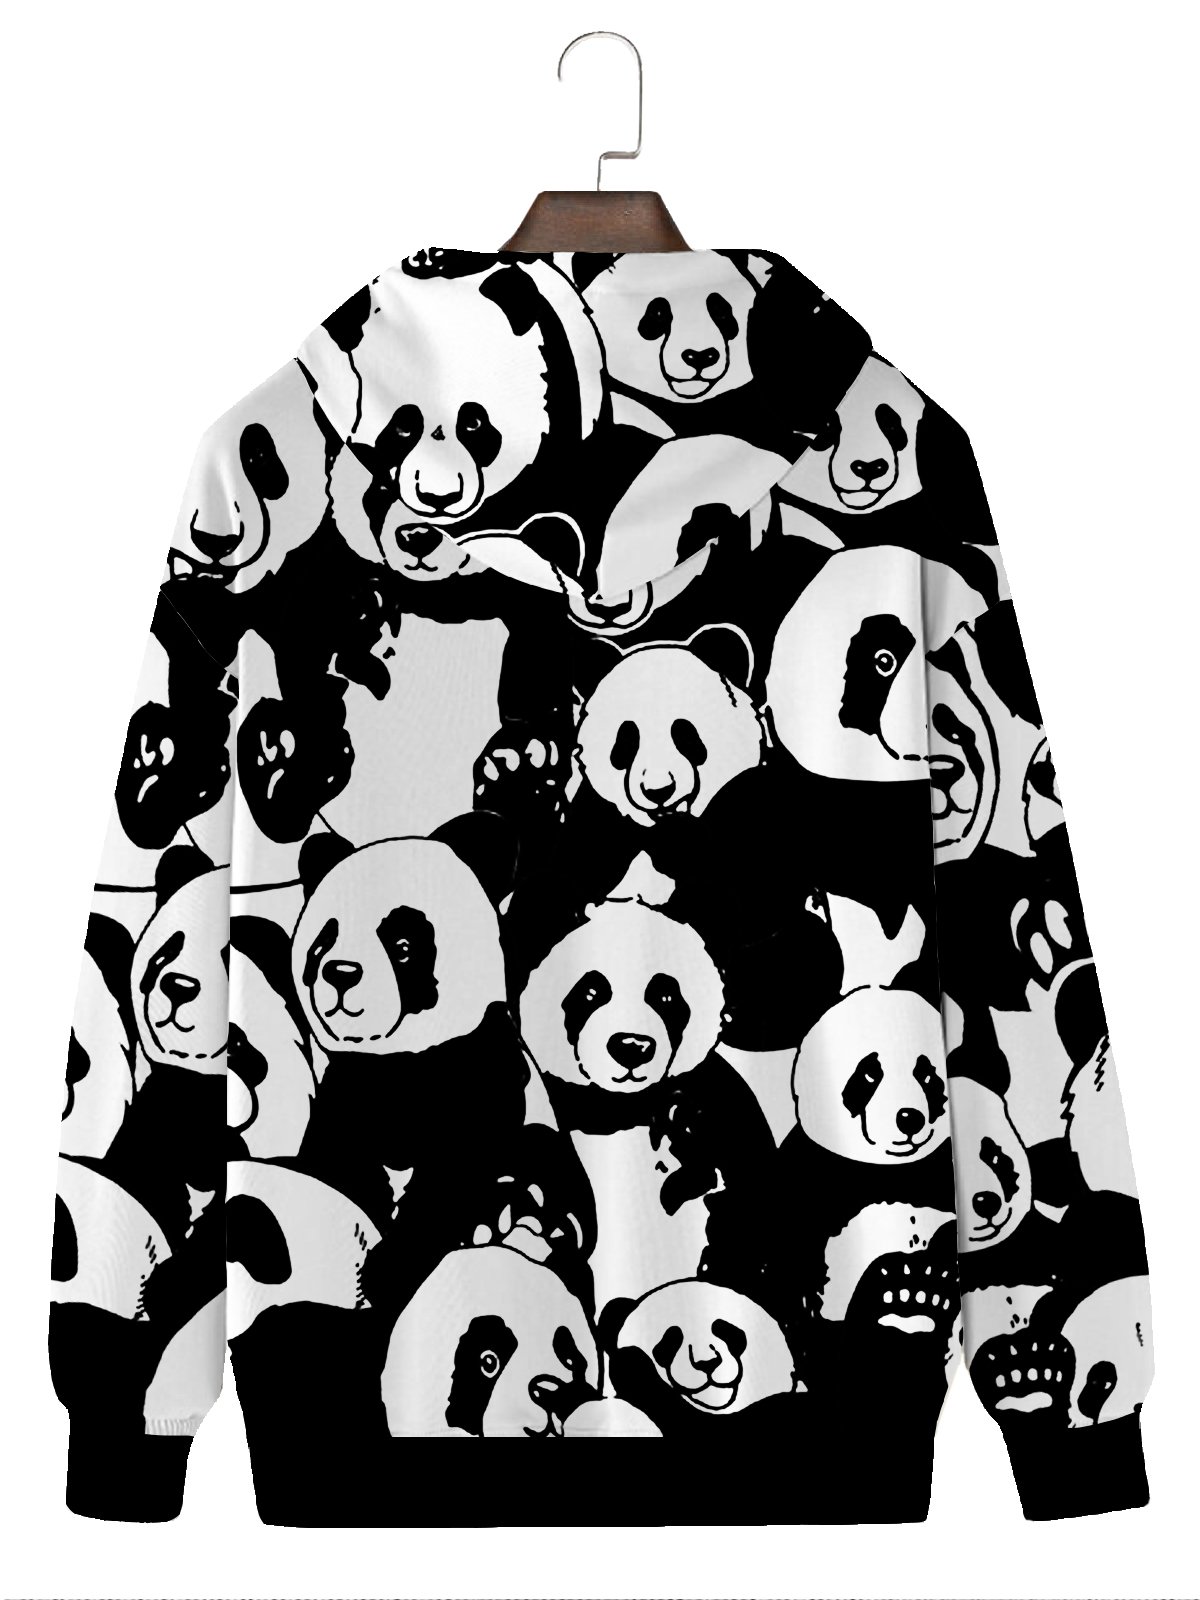 JoyMitty Fun Animal Men's Black Hoodies Panda Cartoon Plus Size Knit Pullover Sweatshirts